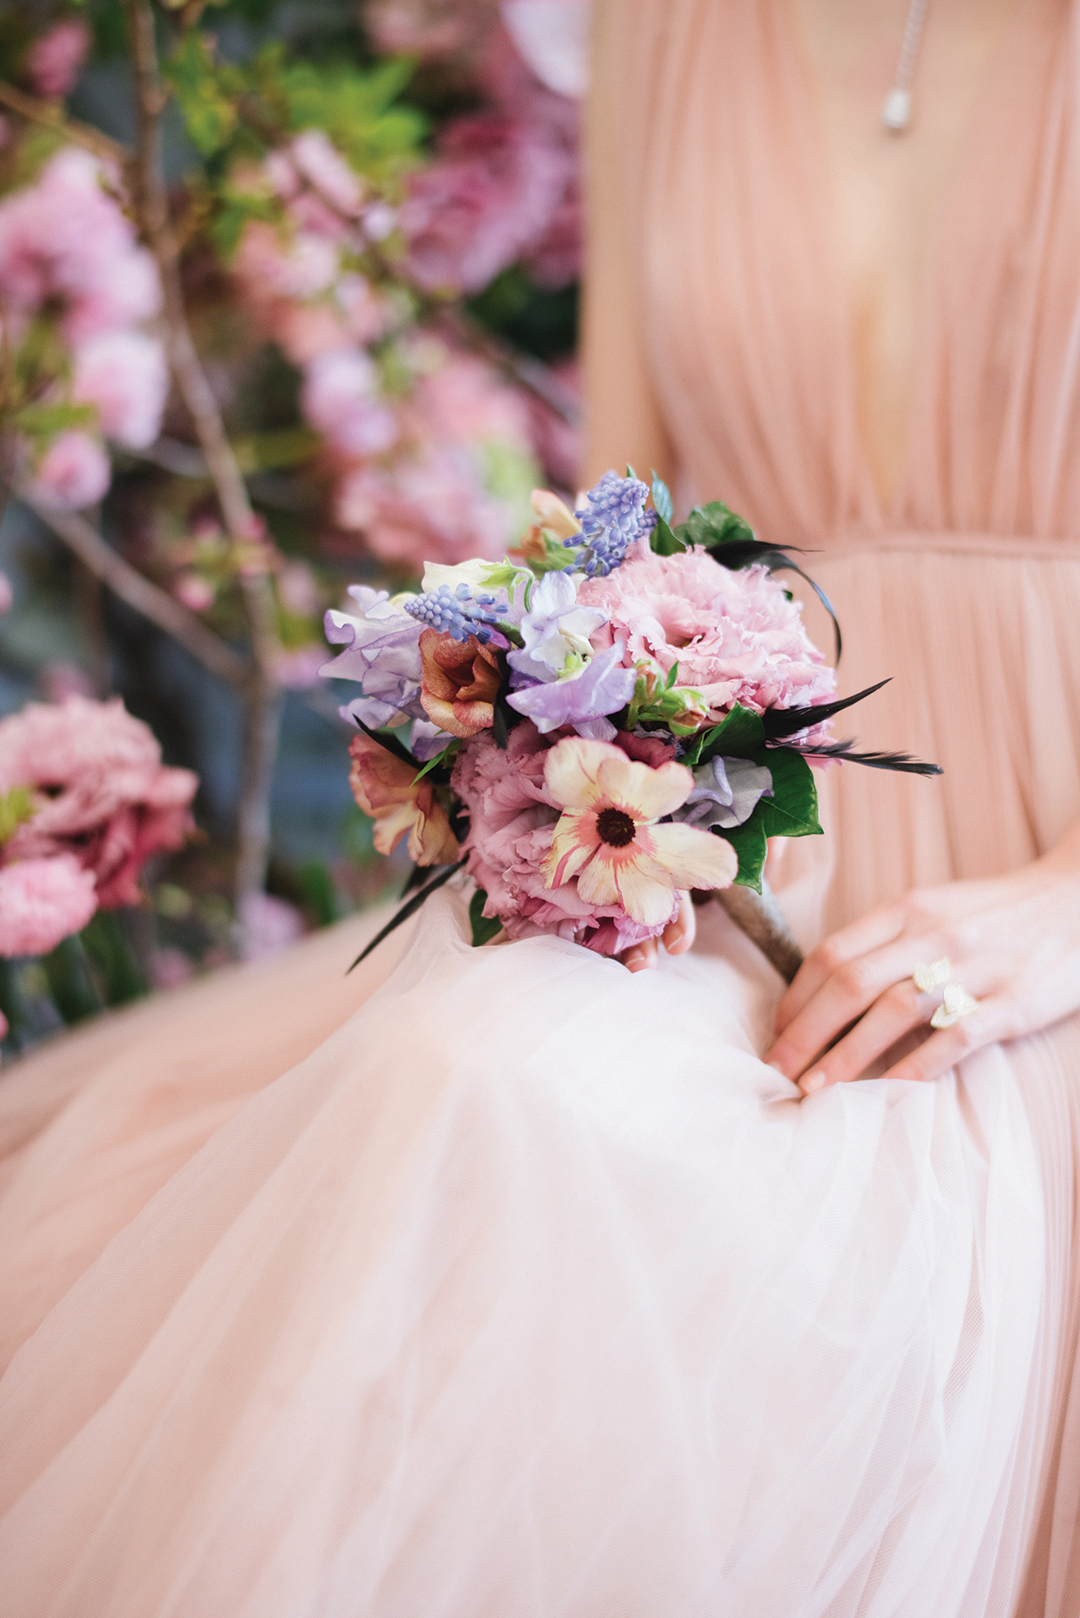 wedding inspiration, spring bouquet, small bouquet, pink wedding dress, wedding inspiraton